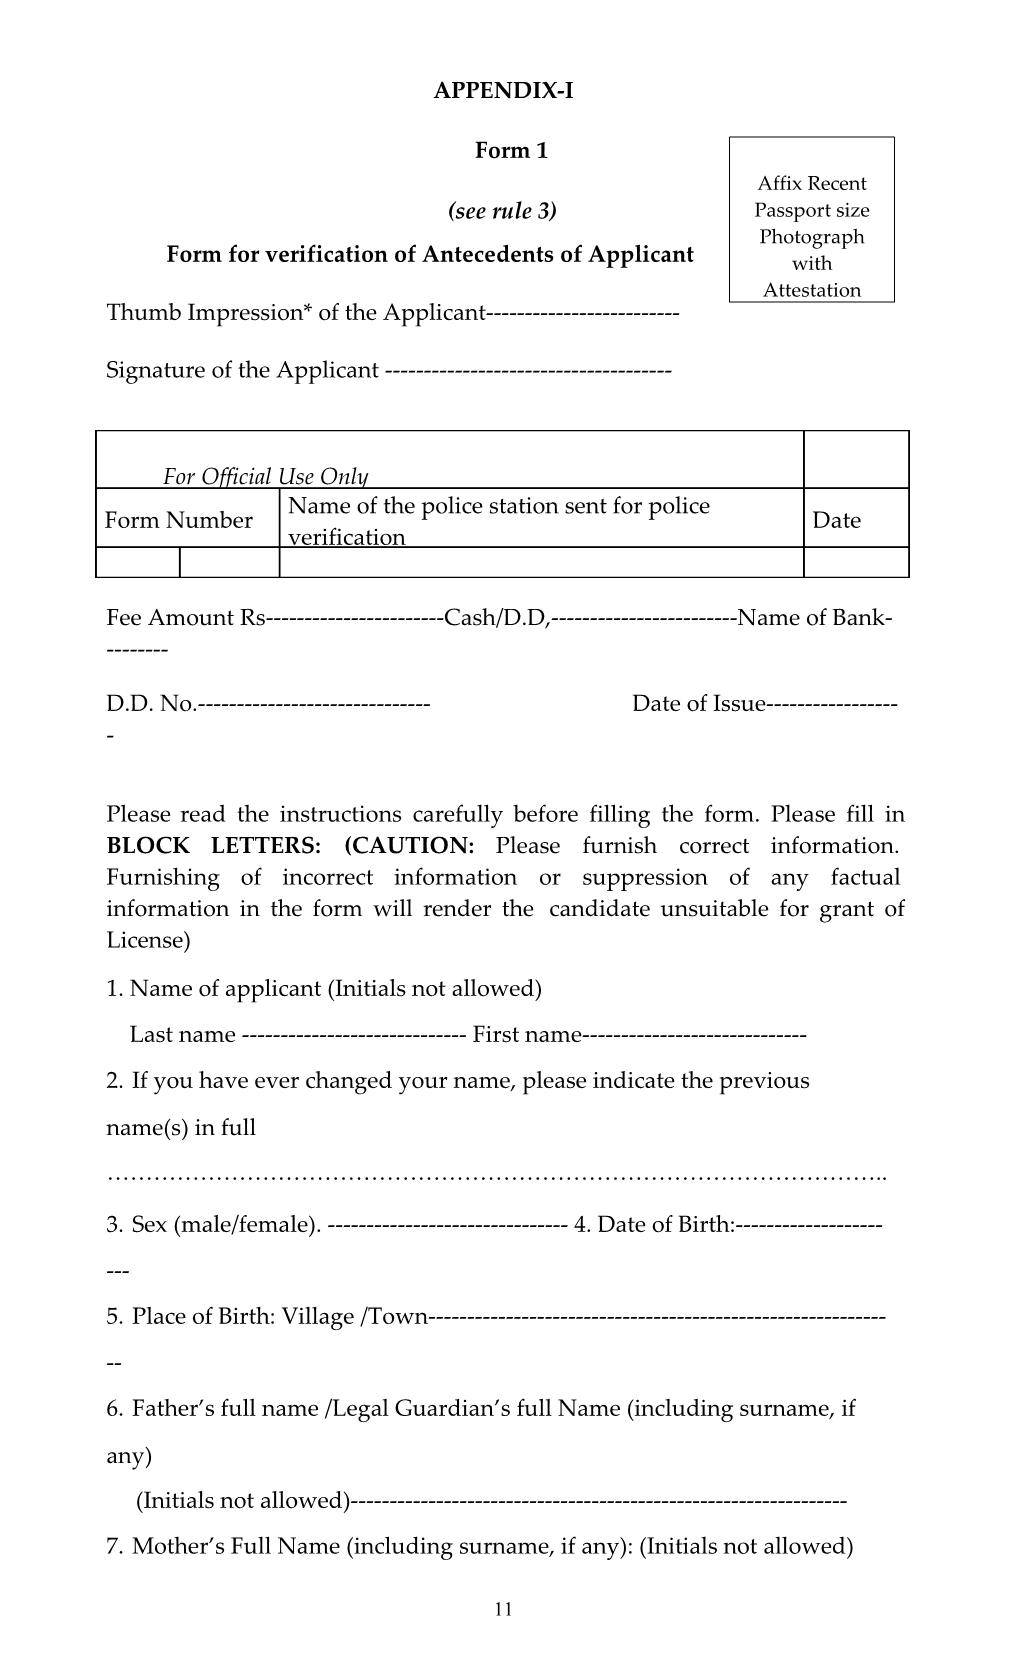 Formfor Verification of Antecedentsof Applicant